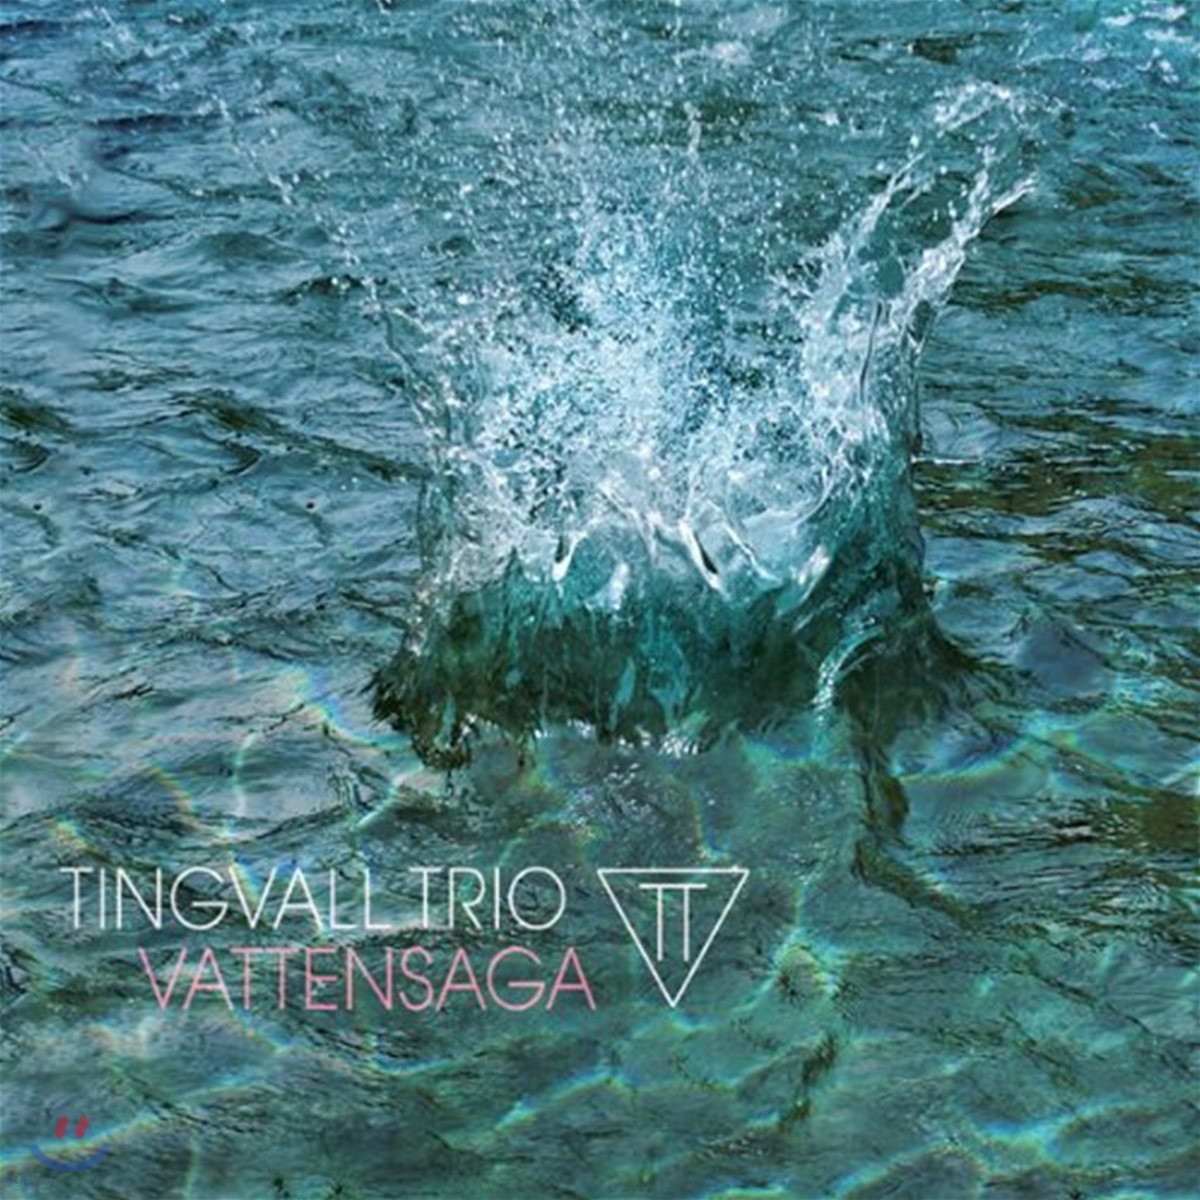 Tingvall Trio (팅발 트리오) - Vattensaga [LP]